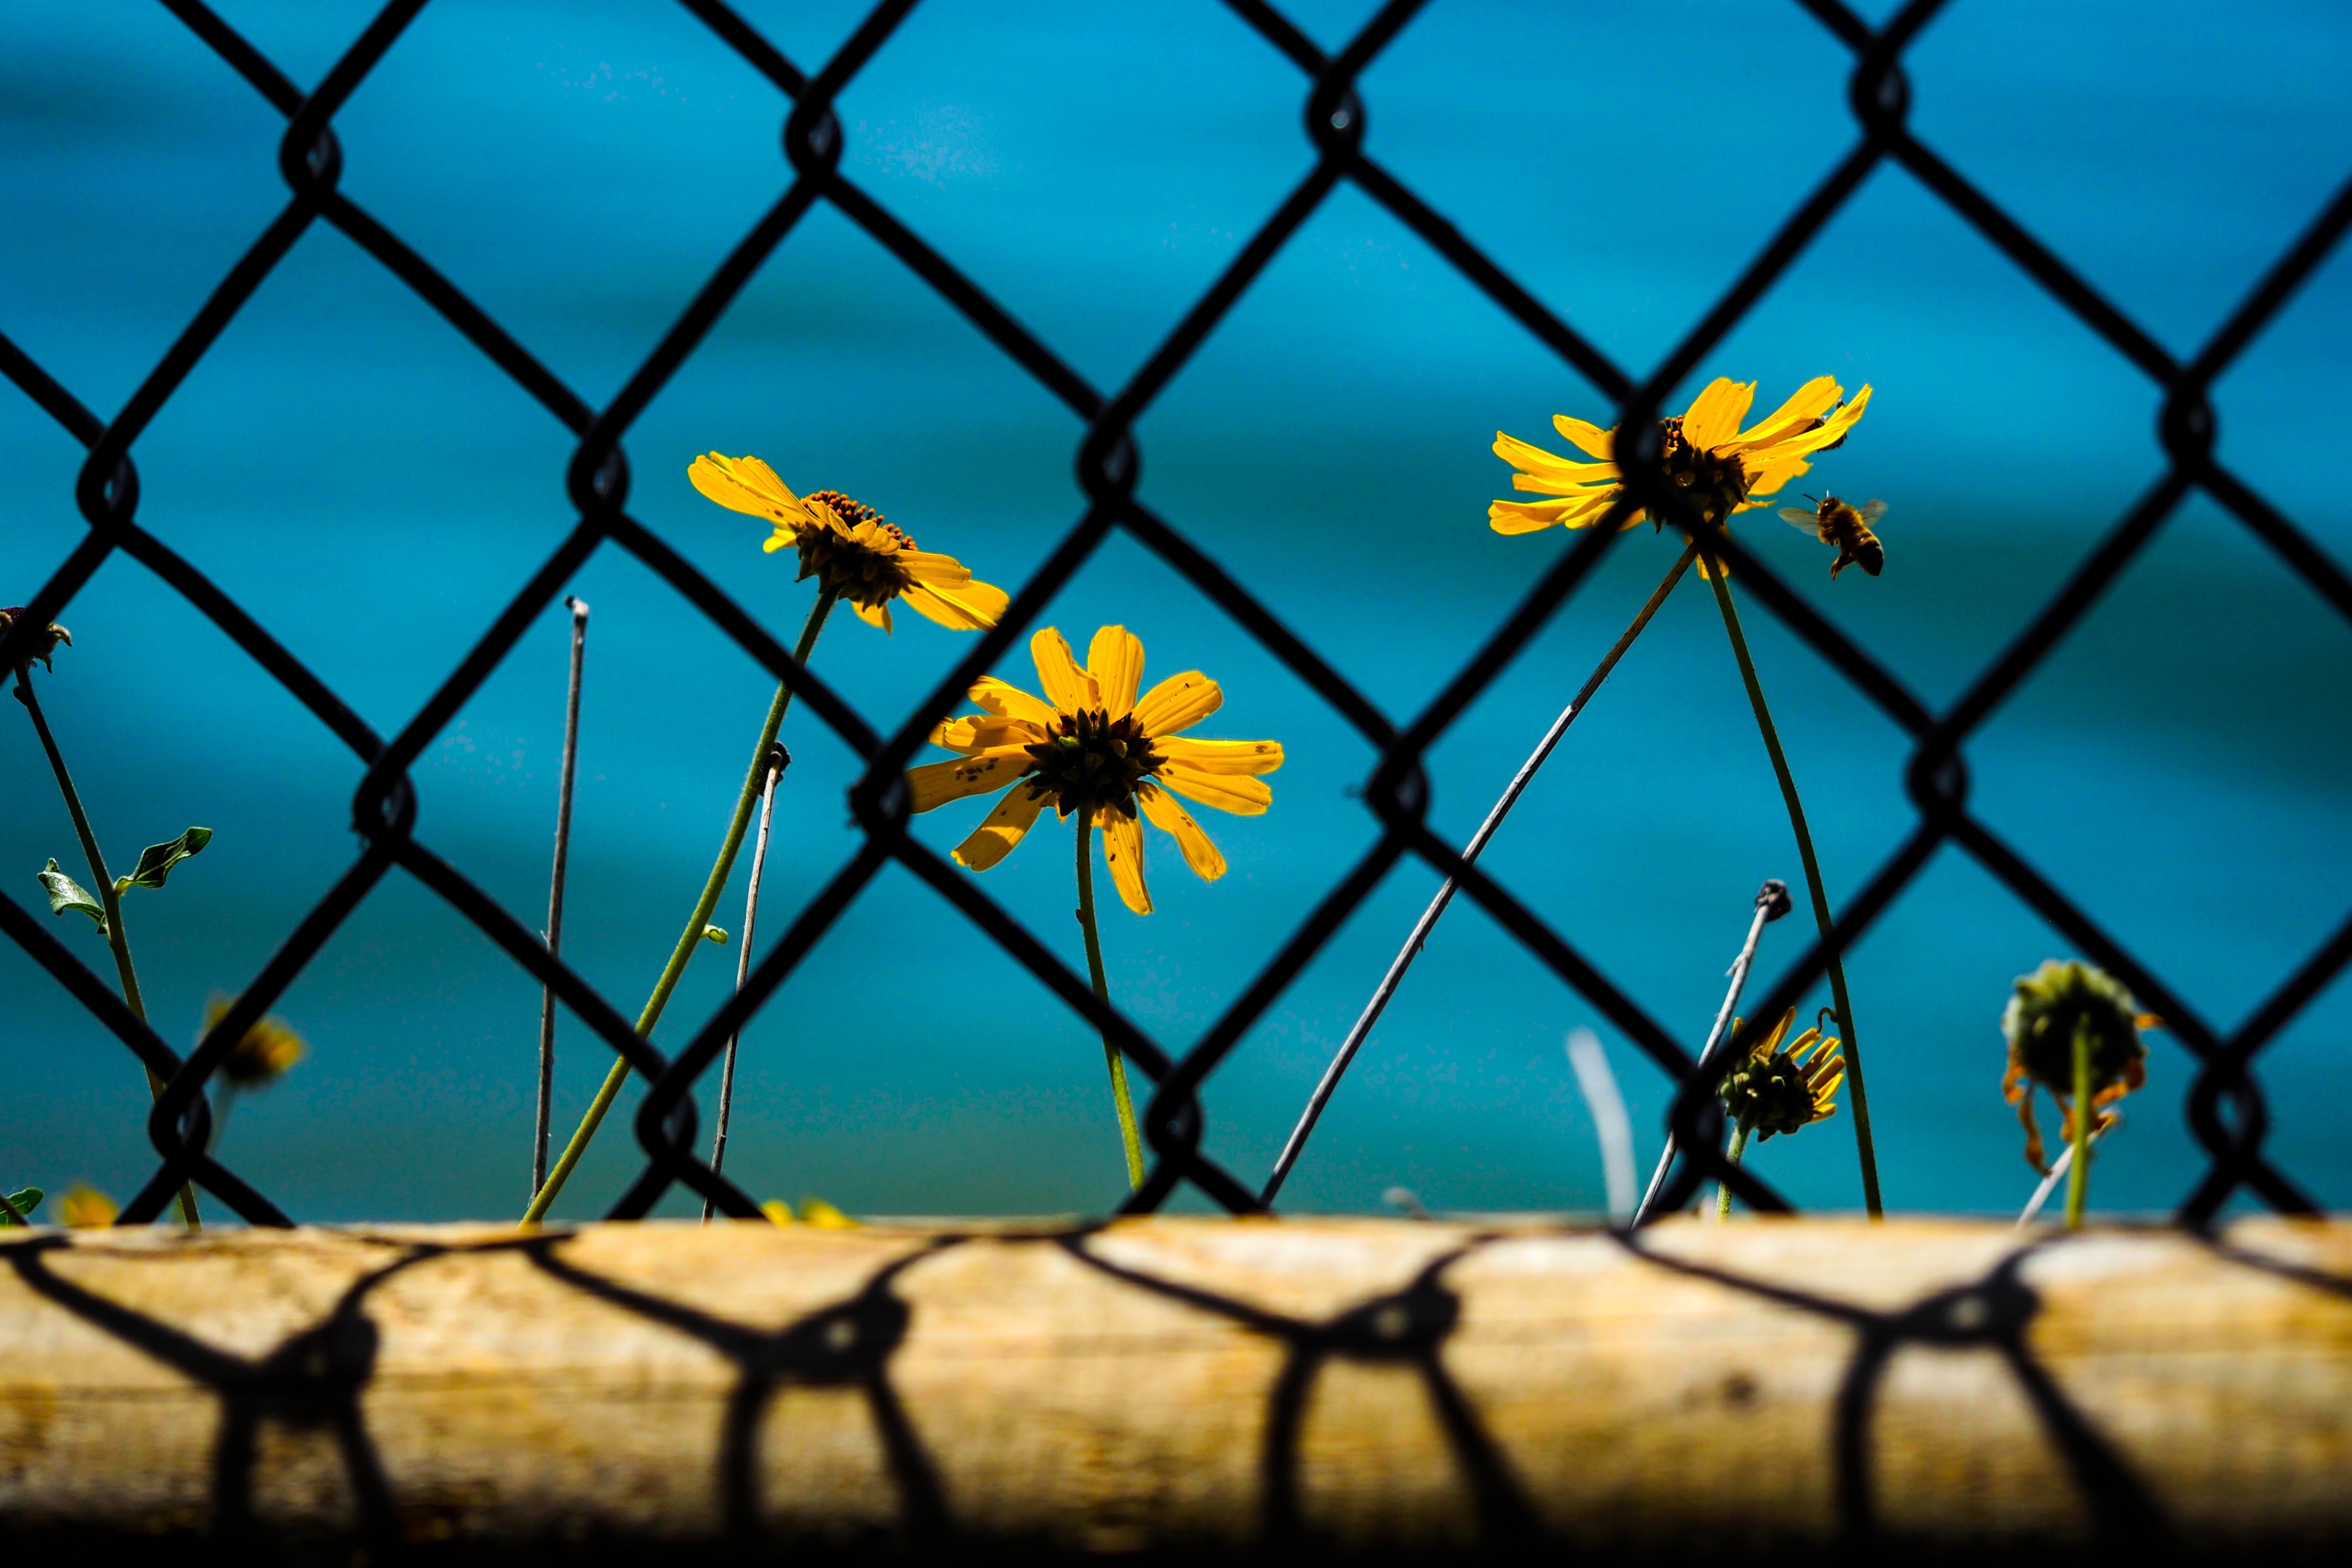 flower, sunflower, garden, plant, chainlink fence, protection